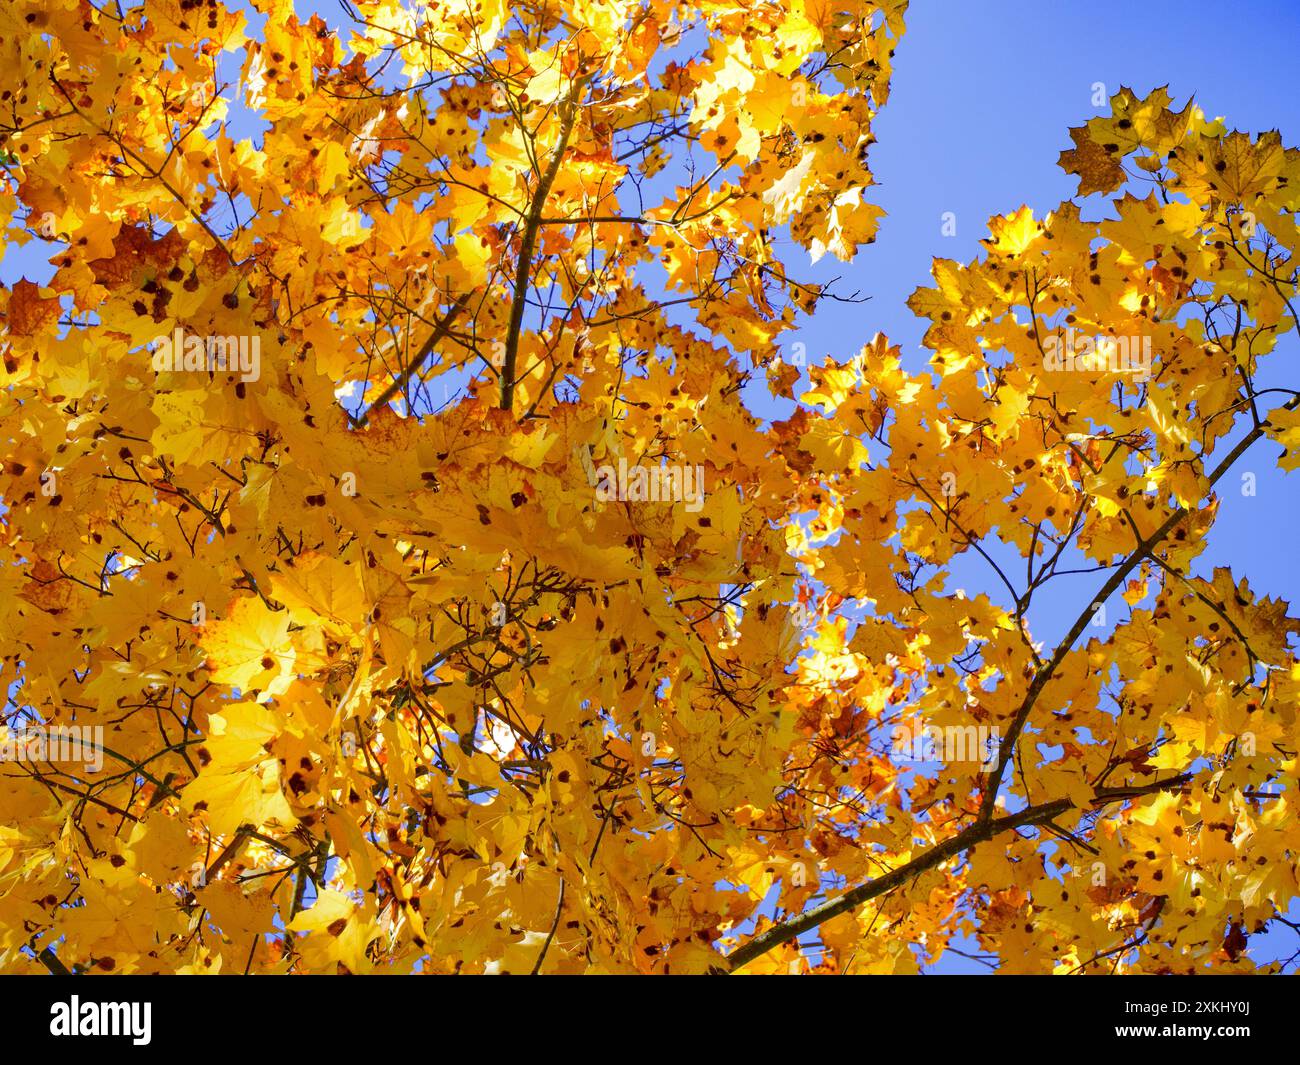 Helle Blätter, Himmel, Äste, ruhige Atmosphäre, Herbstsaison. Stockfoto